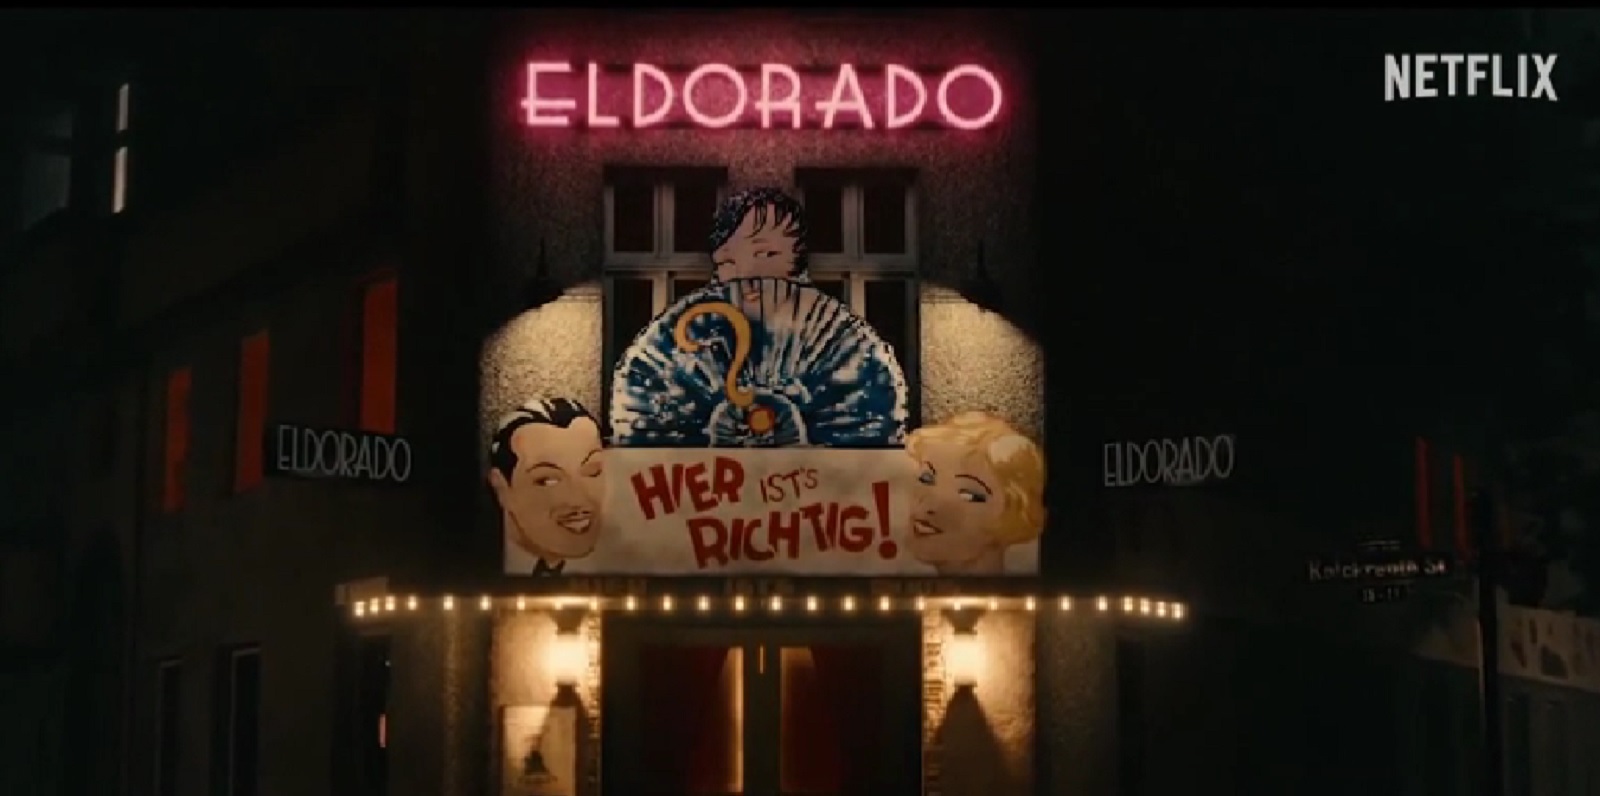 Eldorado - Il nightclub odiato dai nazisti, su Netflix in streaming da oggi